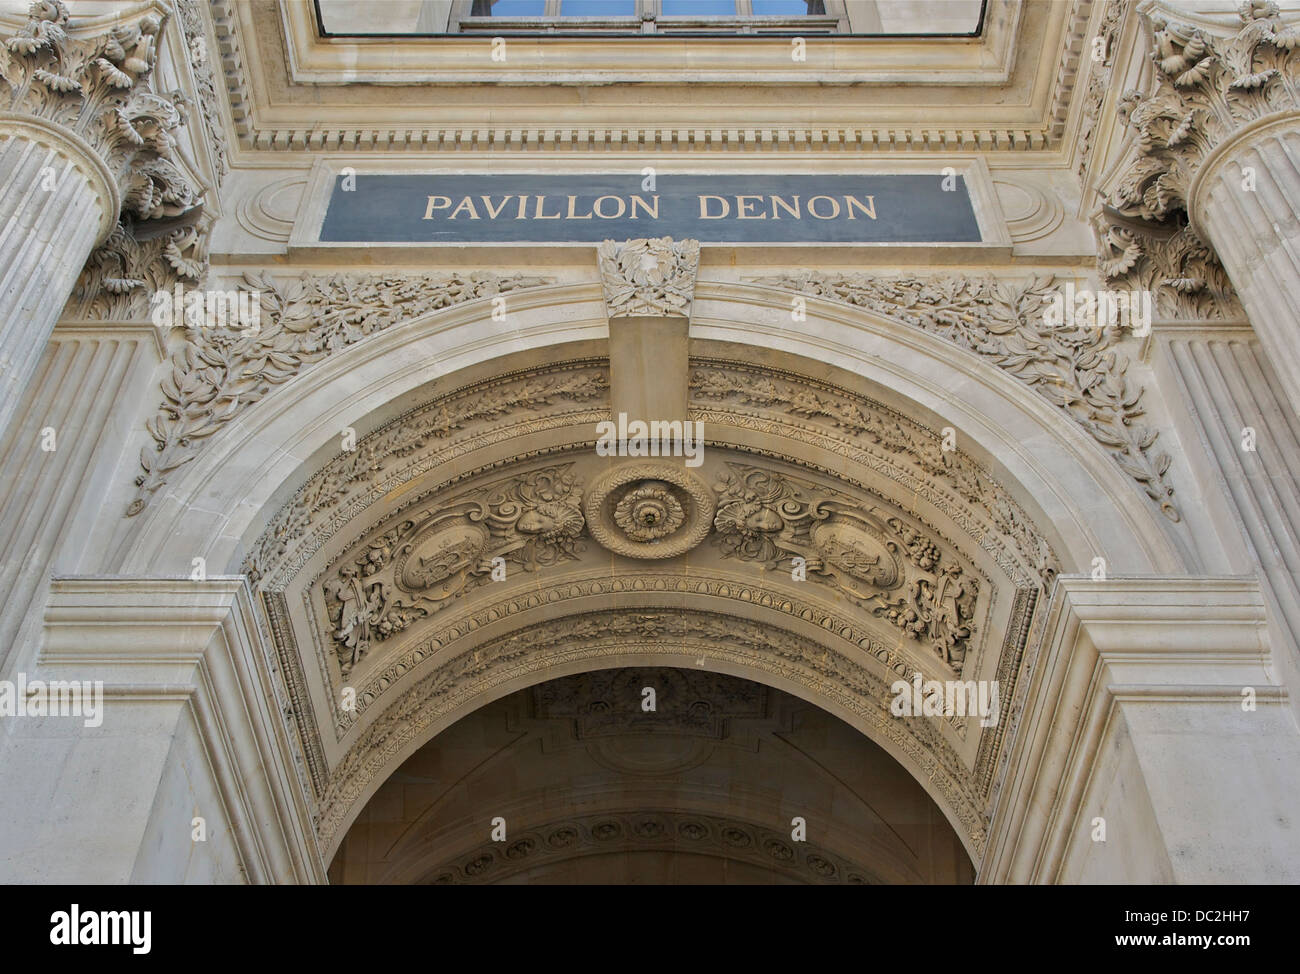 Lintel of the entry of 'Pavillon Denon', Louvre palace, Paris, France. Stock Photo